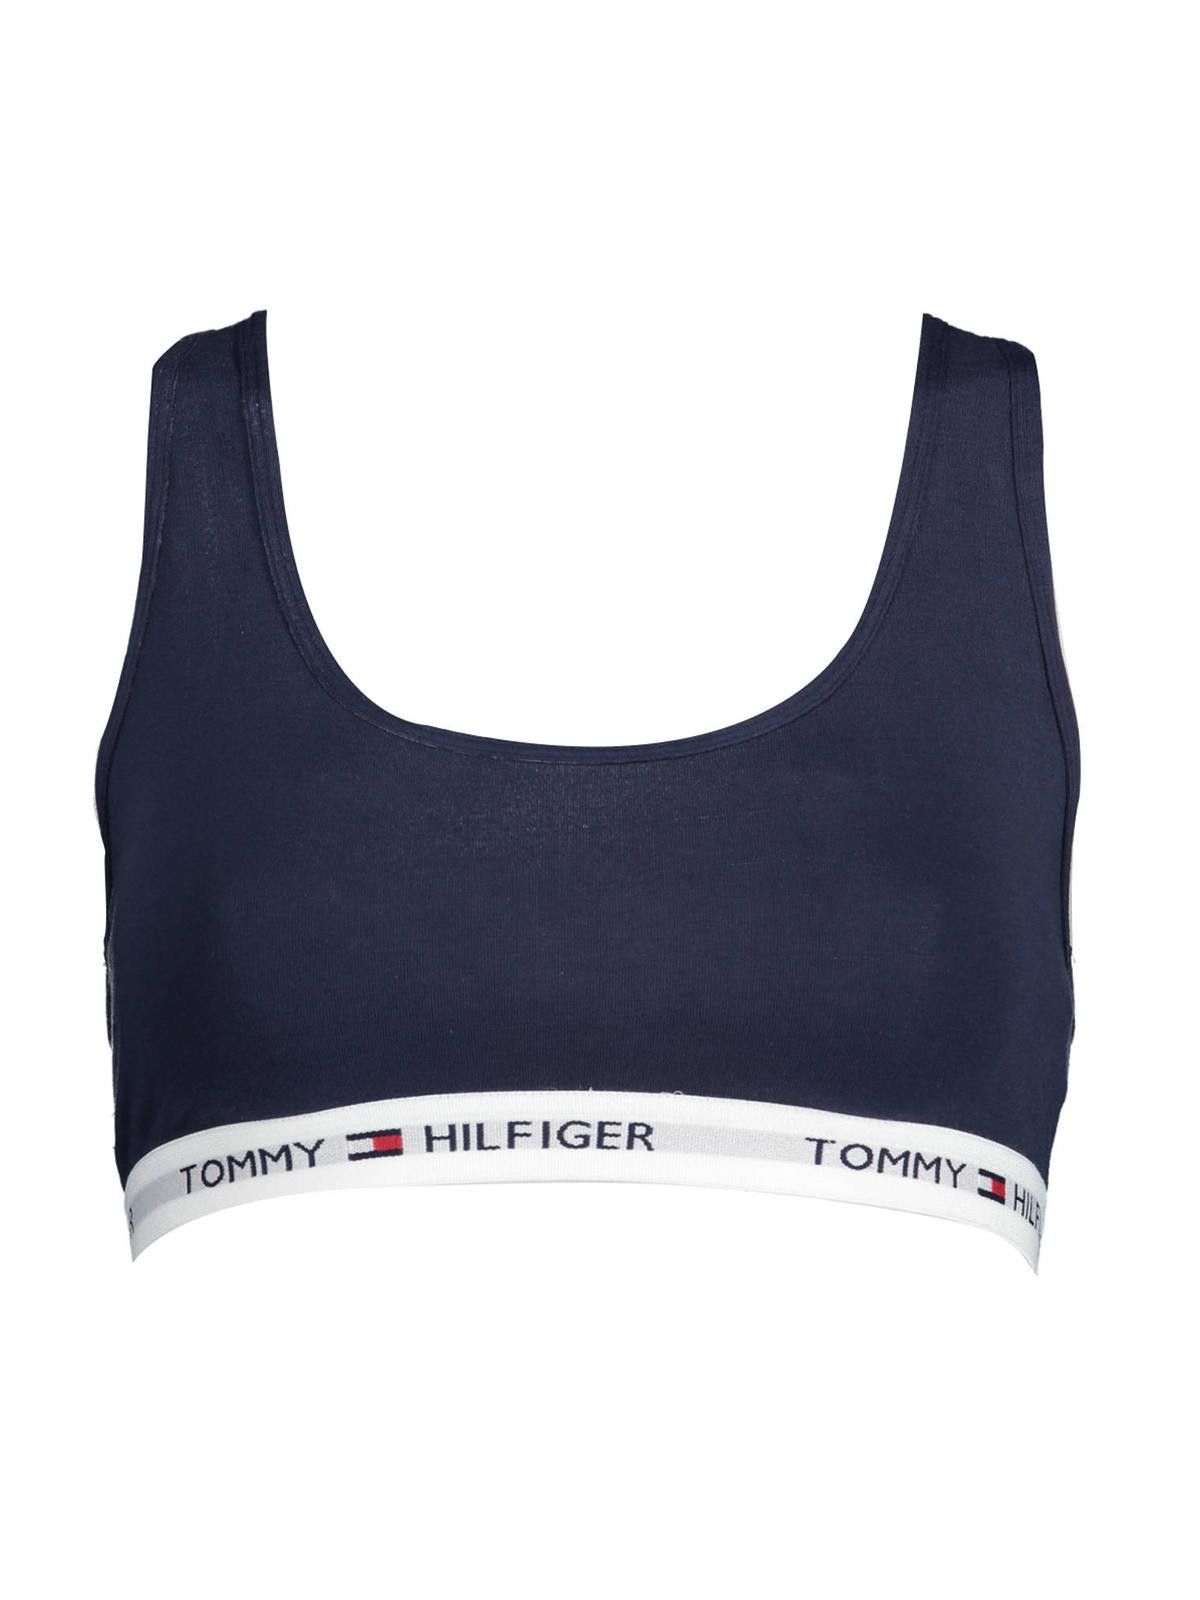 Tommy Hilfiger 34C TOMMY HILFIGER Women Multicolor Padded